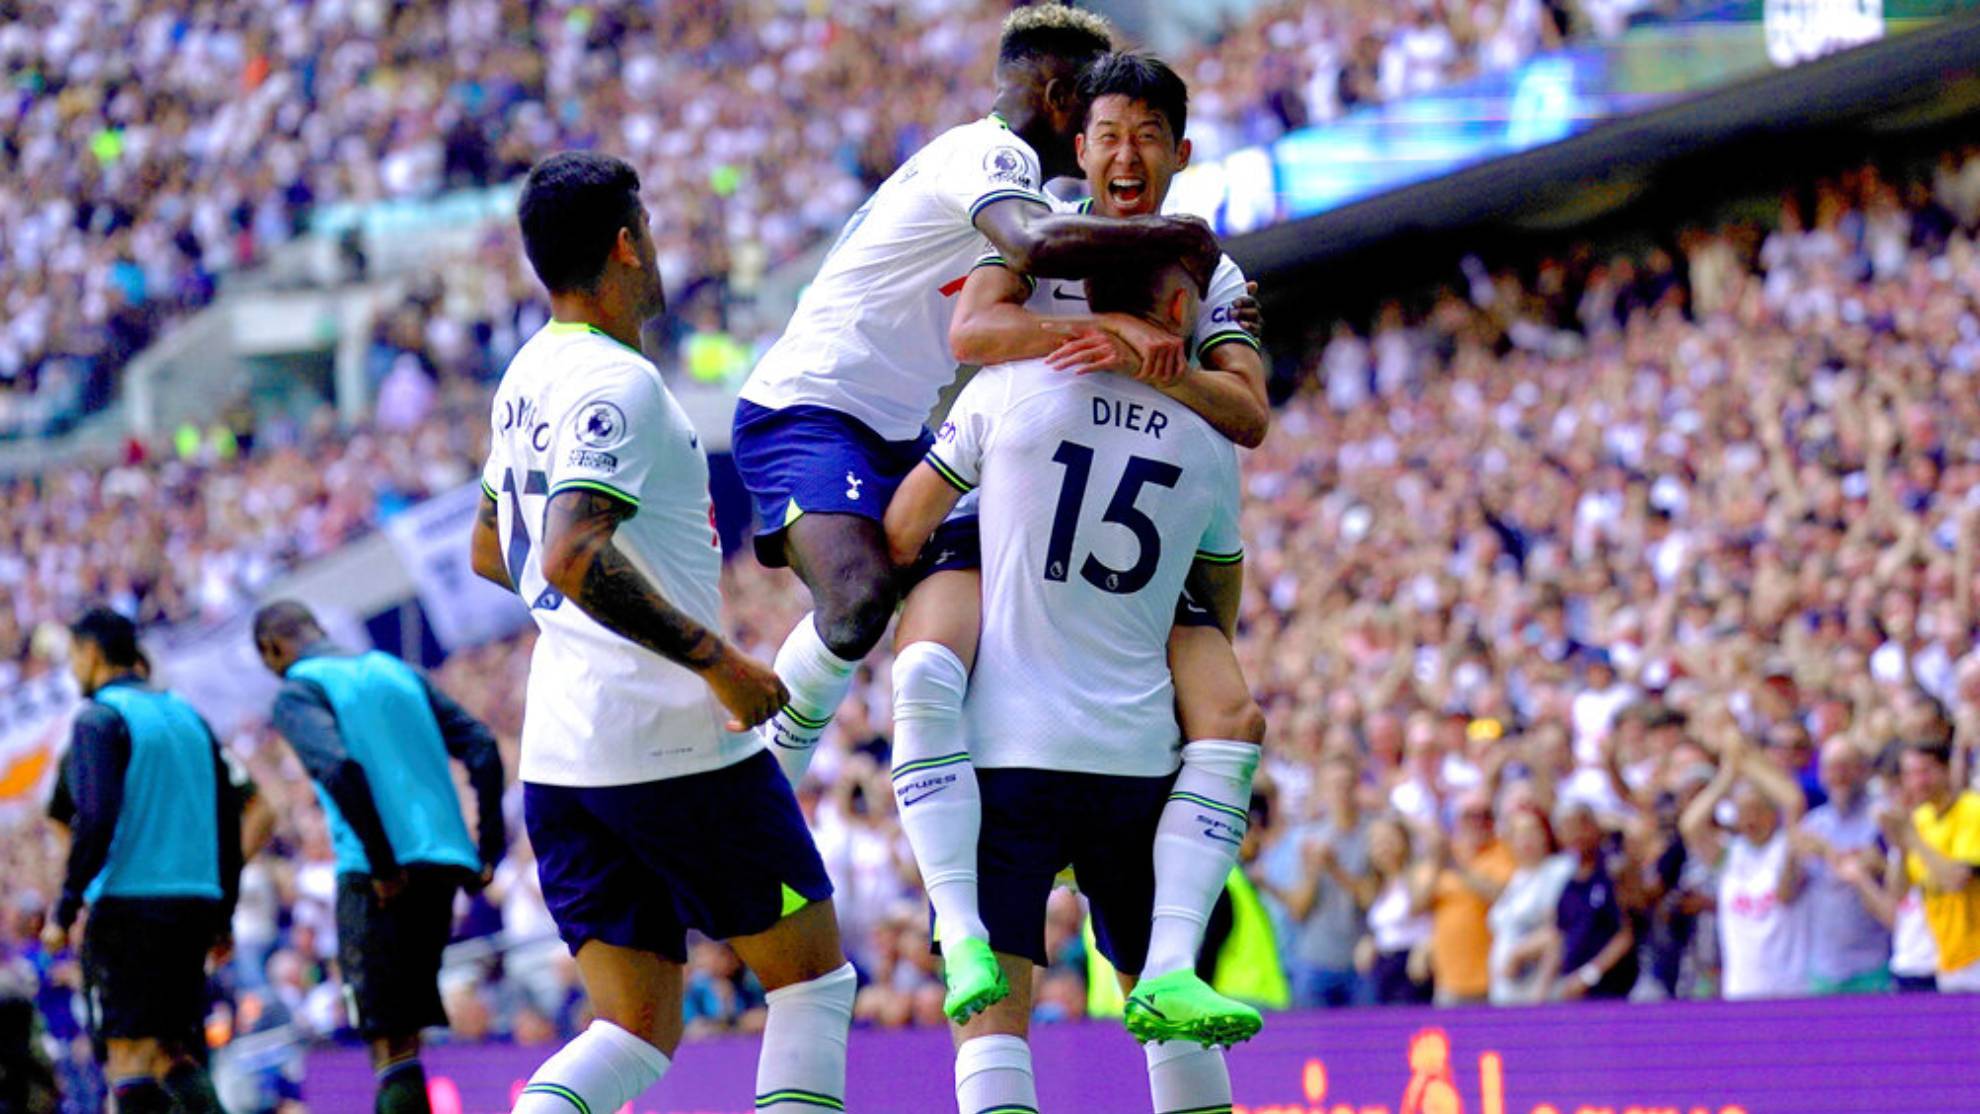 Tottenham recovers to beat Southampton 4-1 in Premier League opener